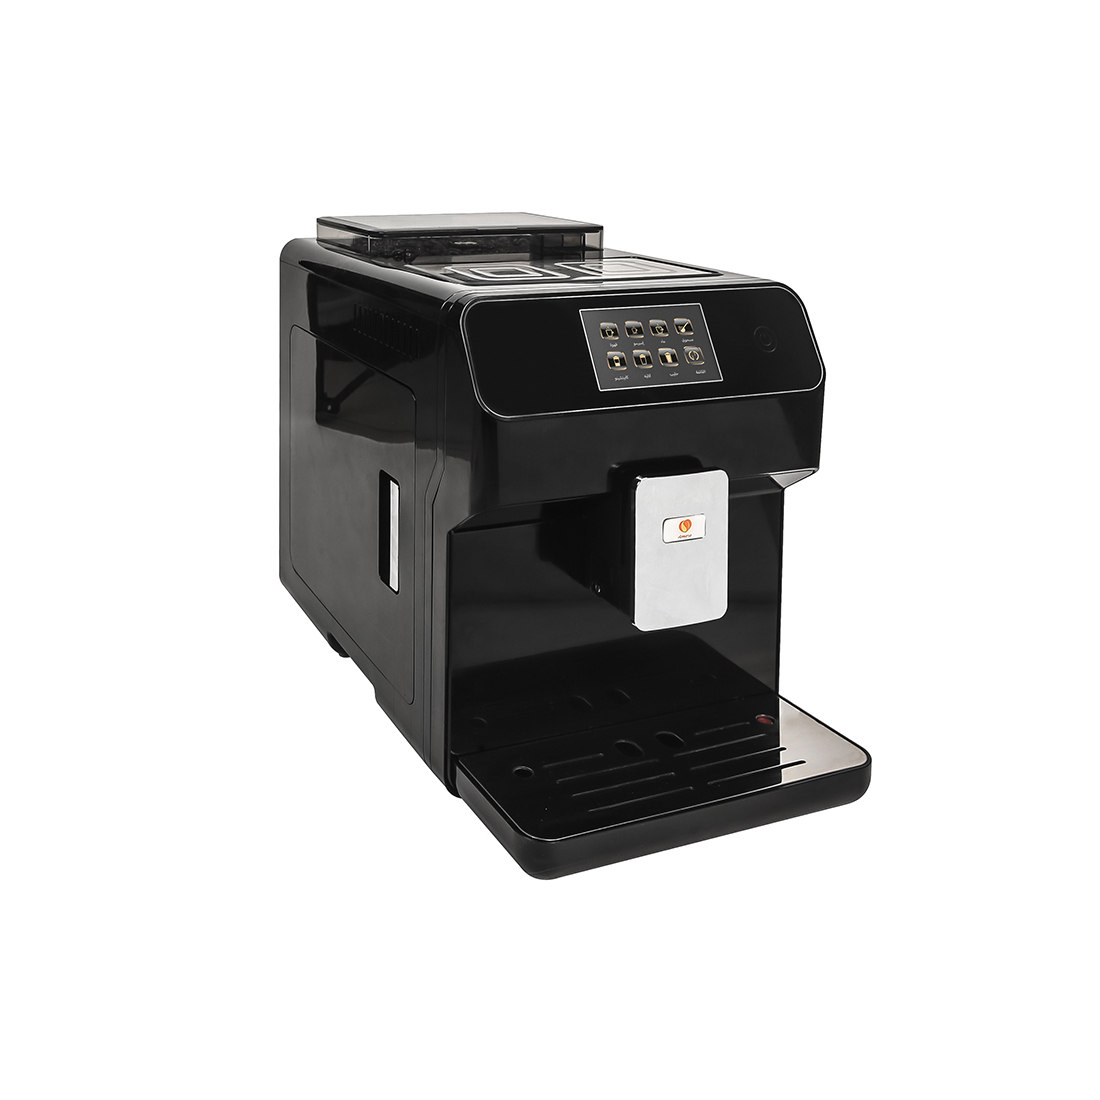 AMORE Automatic Coffee Machine|mkayn|مكاين